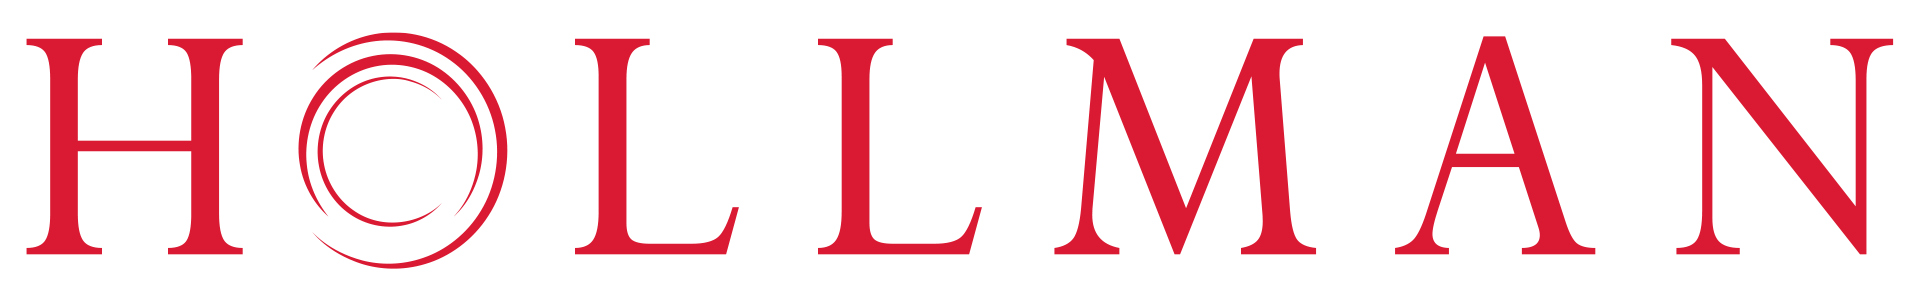 Hollman-Logo-Red.png